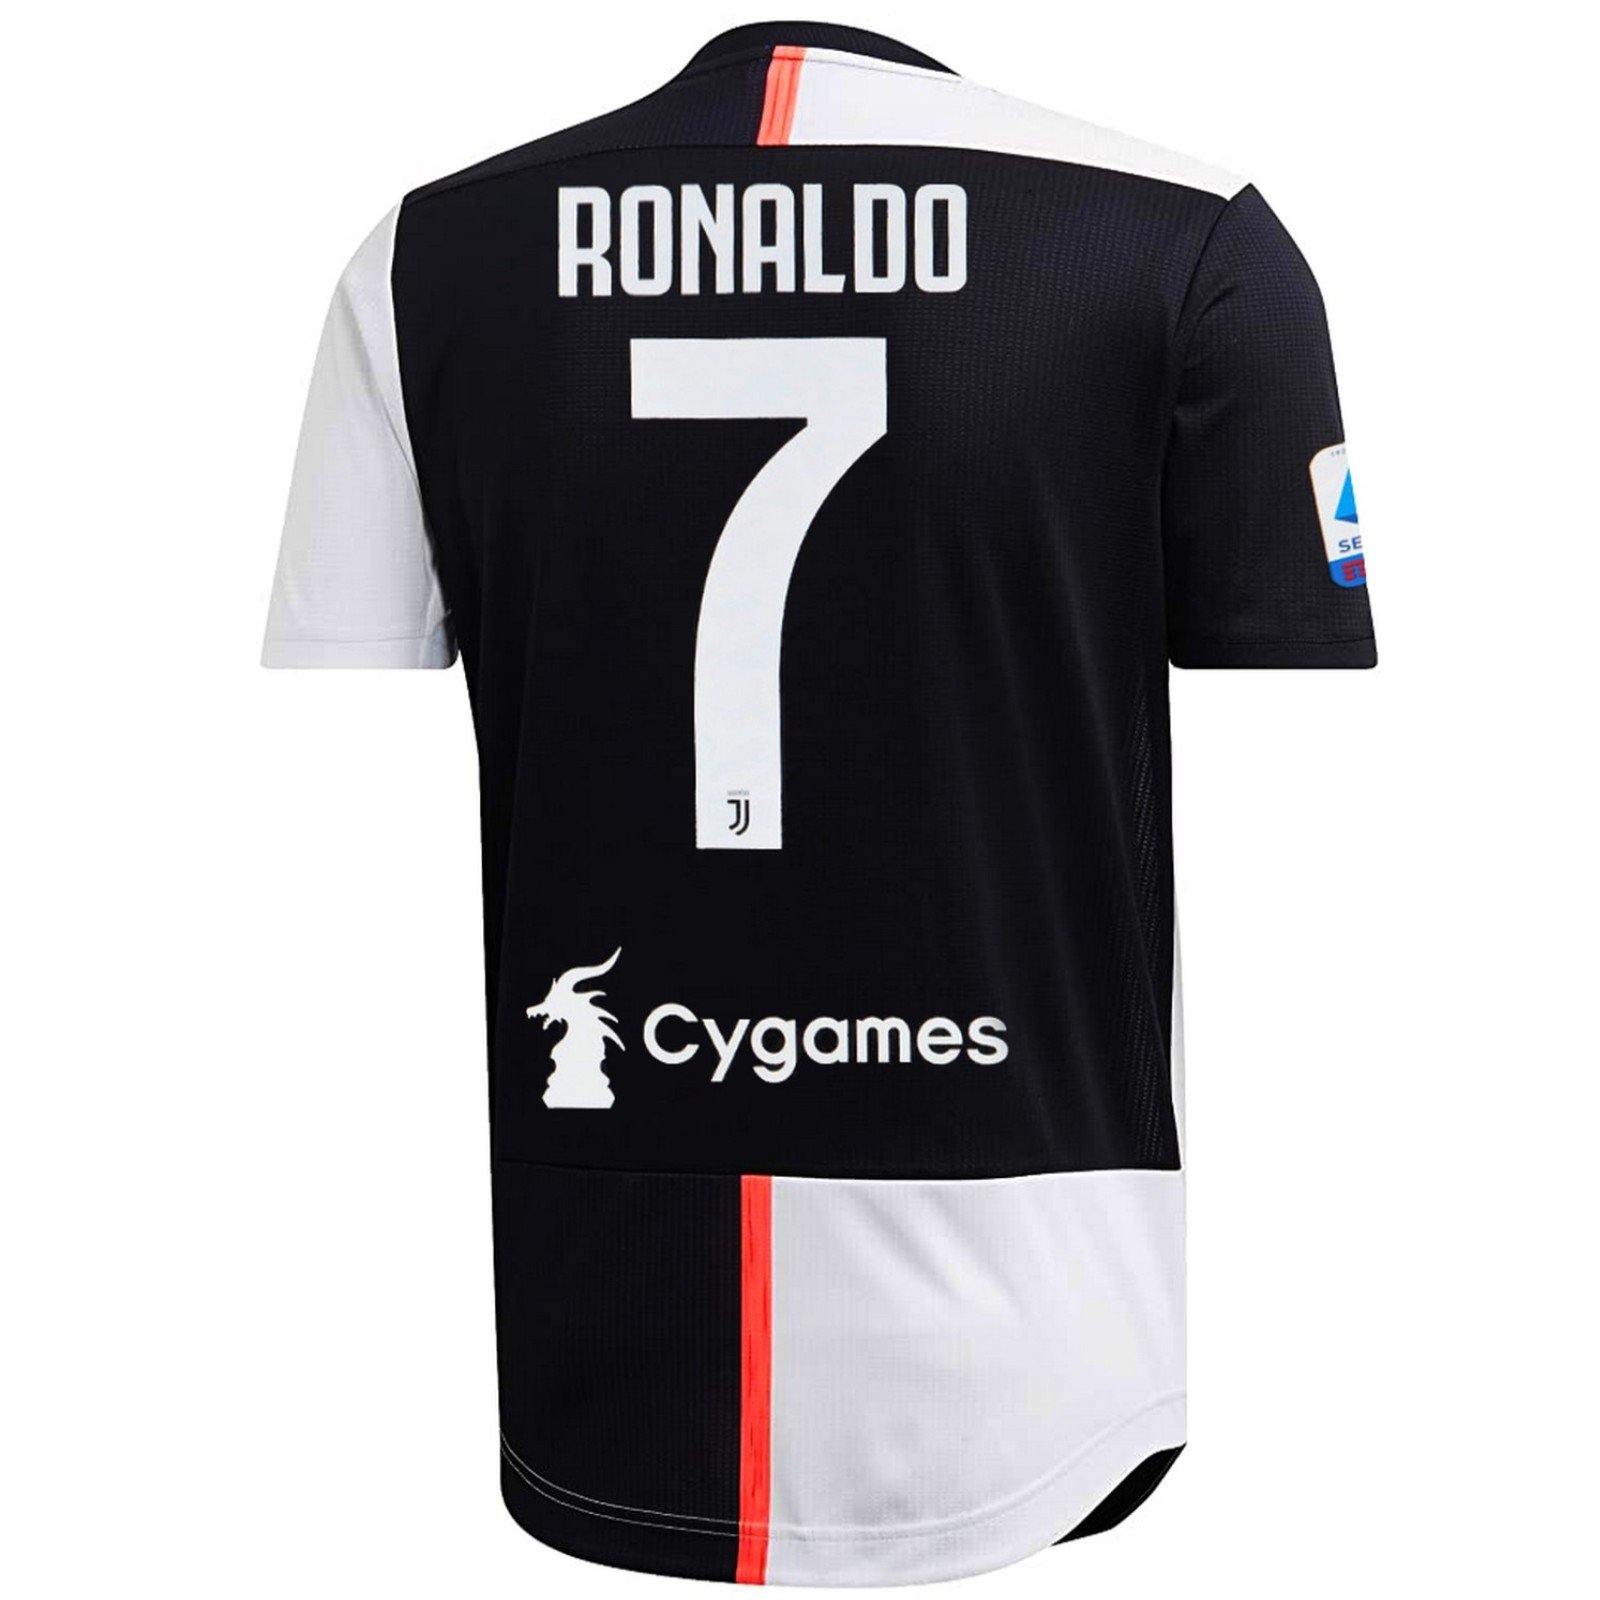 Meisje geweten plug Juventus Cristiano Ronaldo Home soccer jersey Player Issue 2019/20 - Adidas  – SoccerTracksuits.com